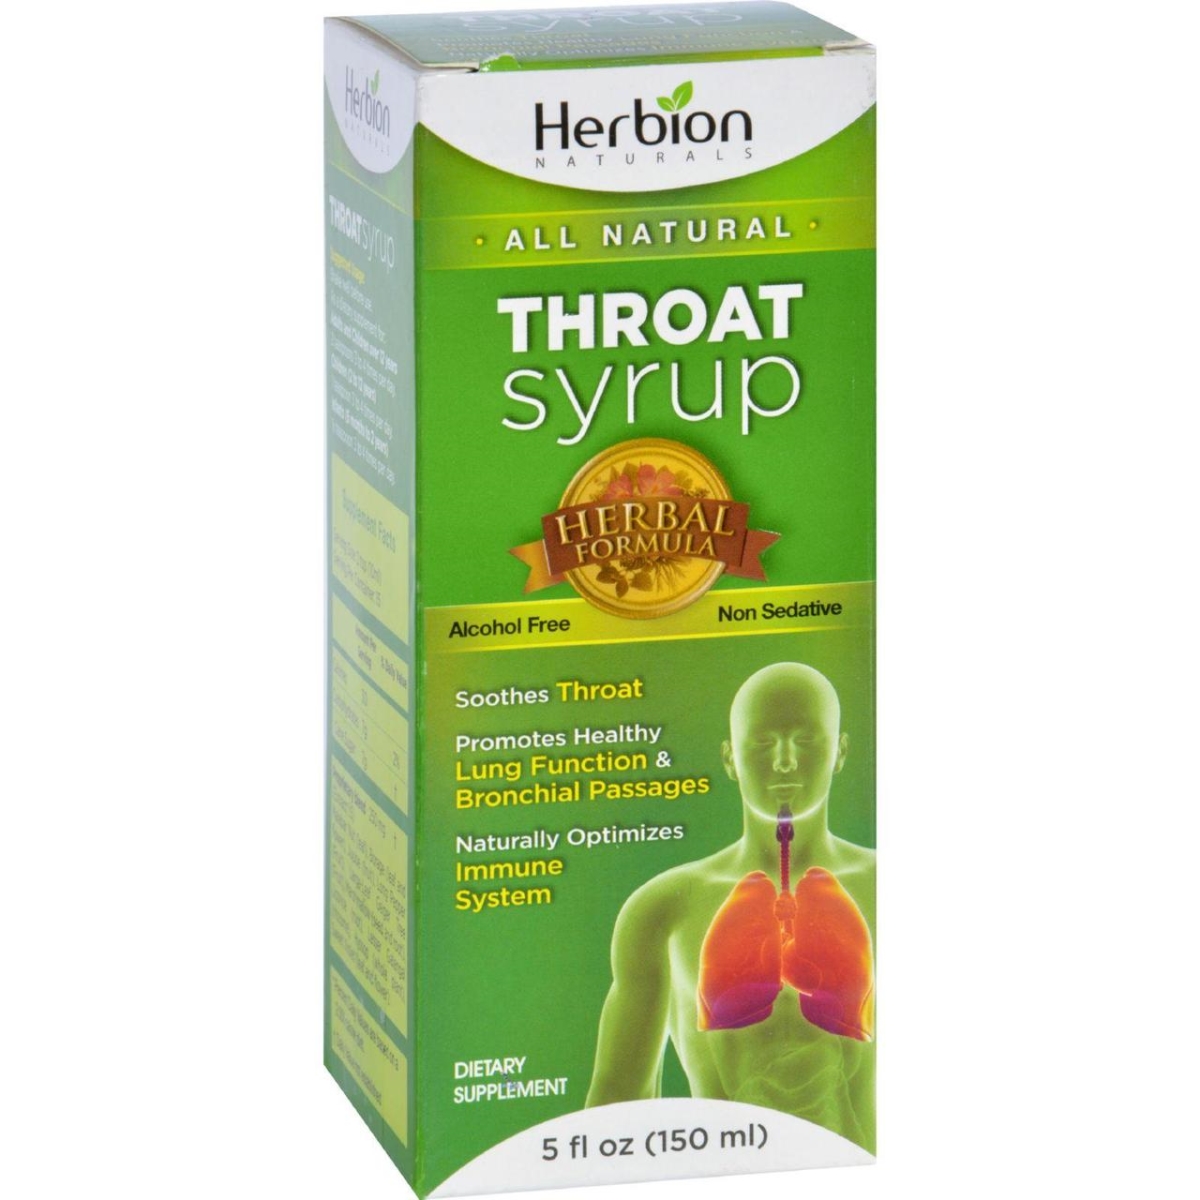 Hg1638188 5 Oz Throat Syrup - All Natural